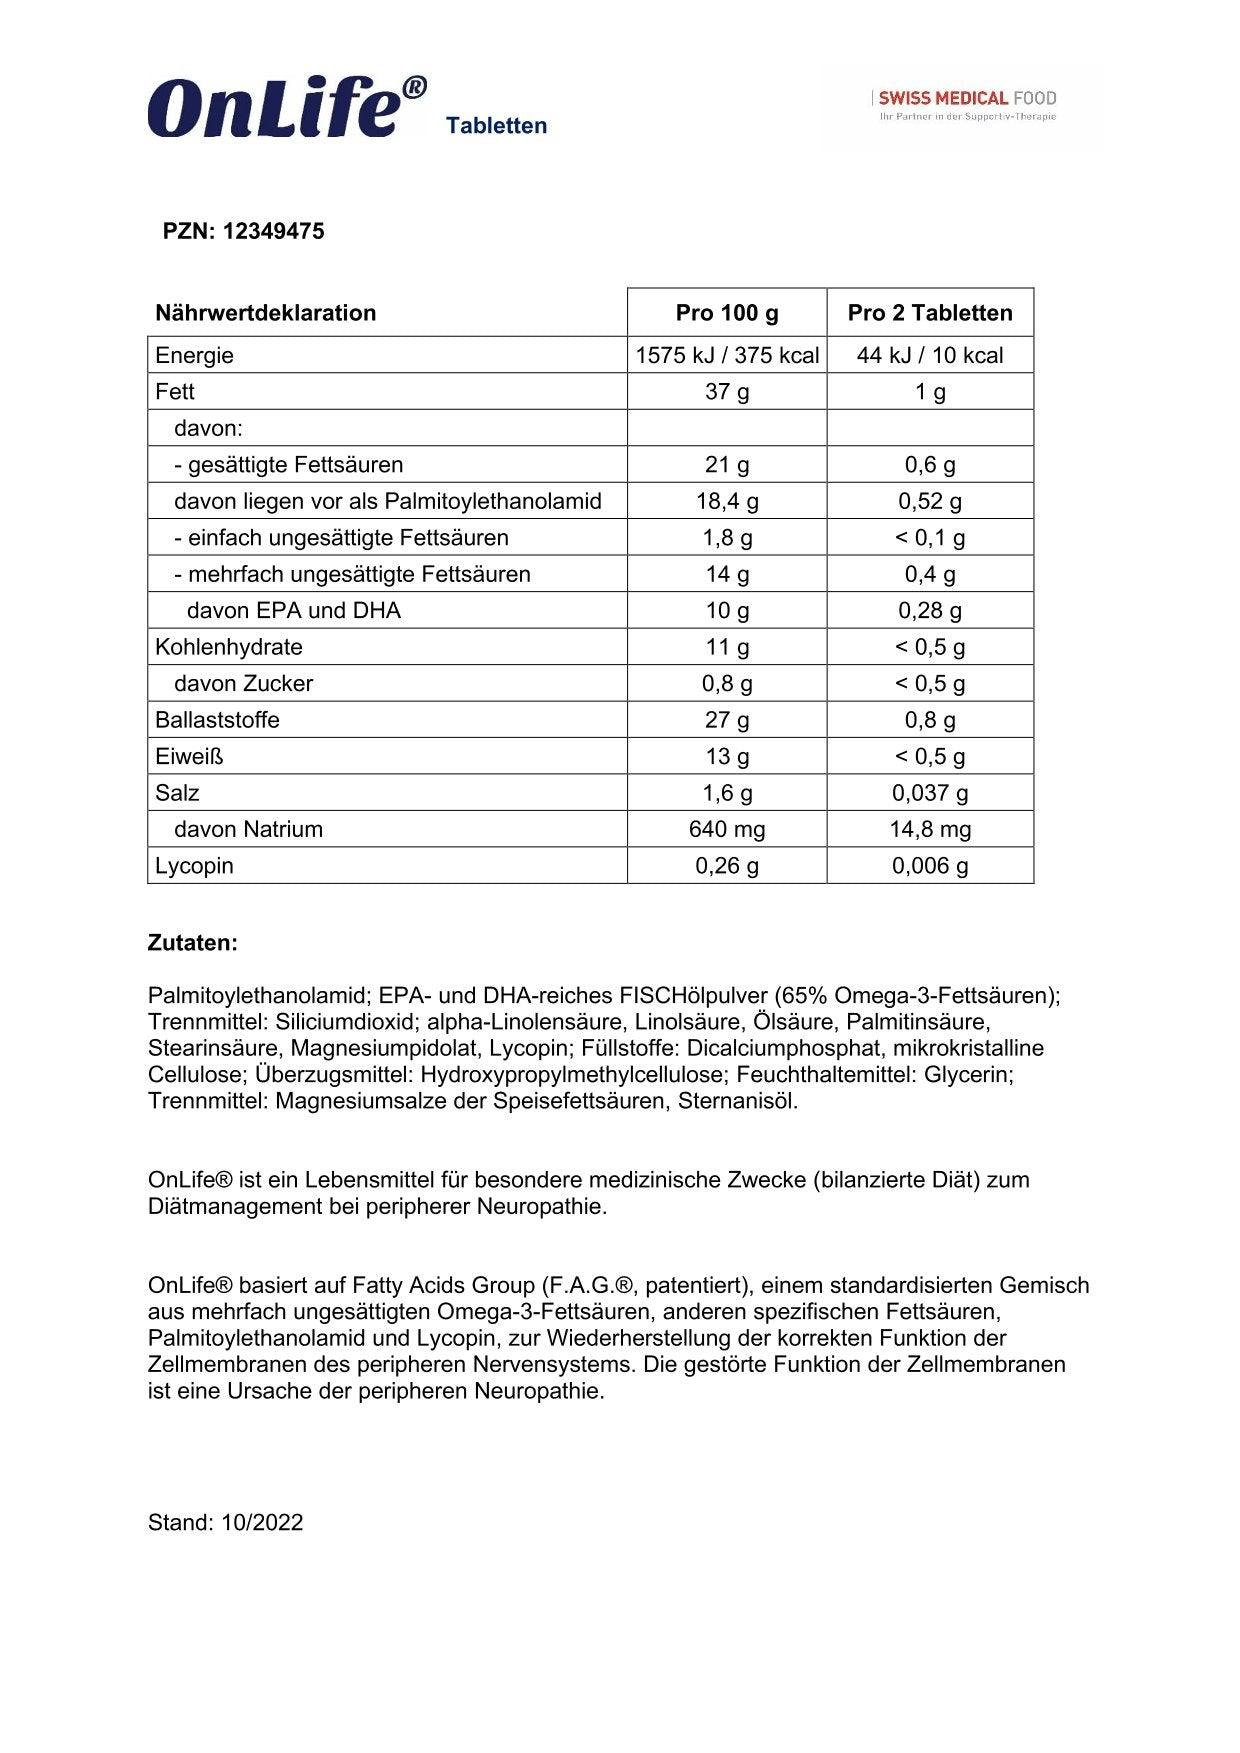 OnLife® Therapie komplett - 5x Tabletten & 1x Creme - Swiss Medical Food DE GmbH